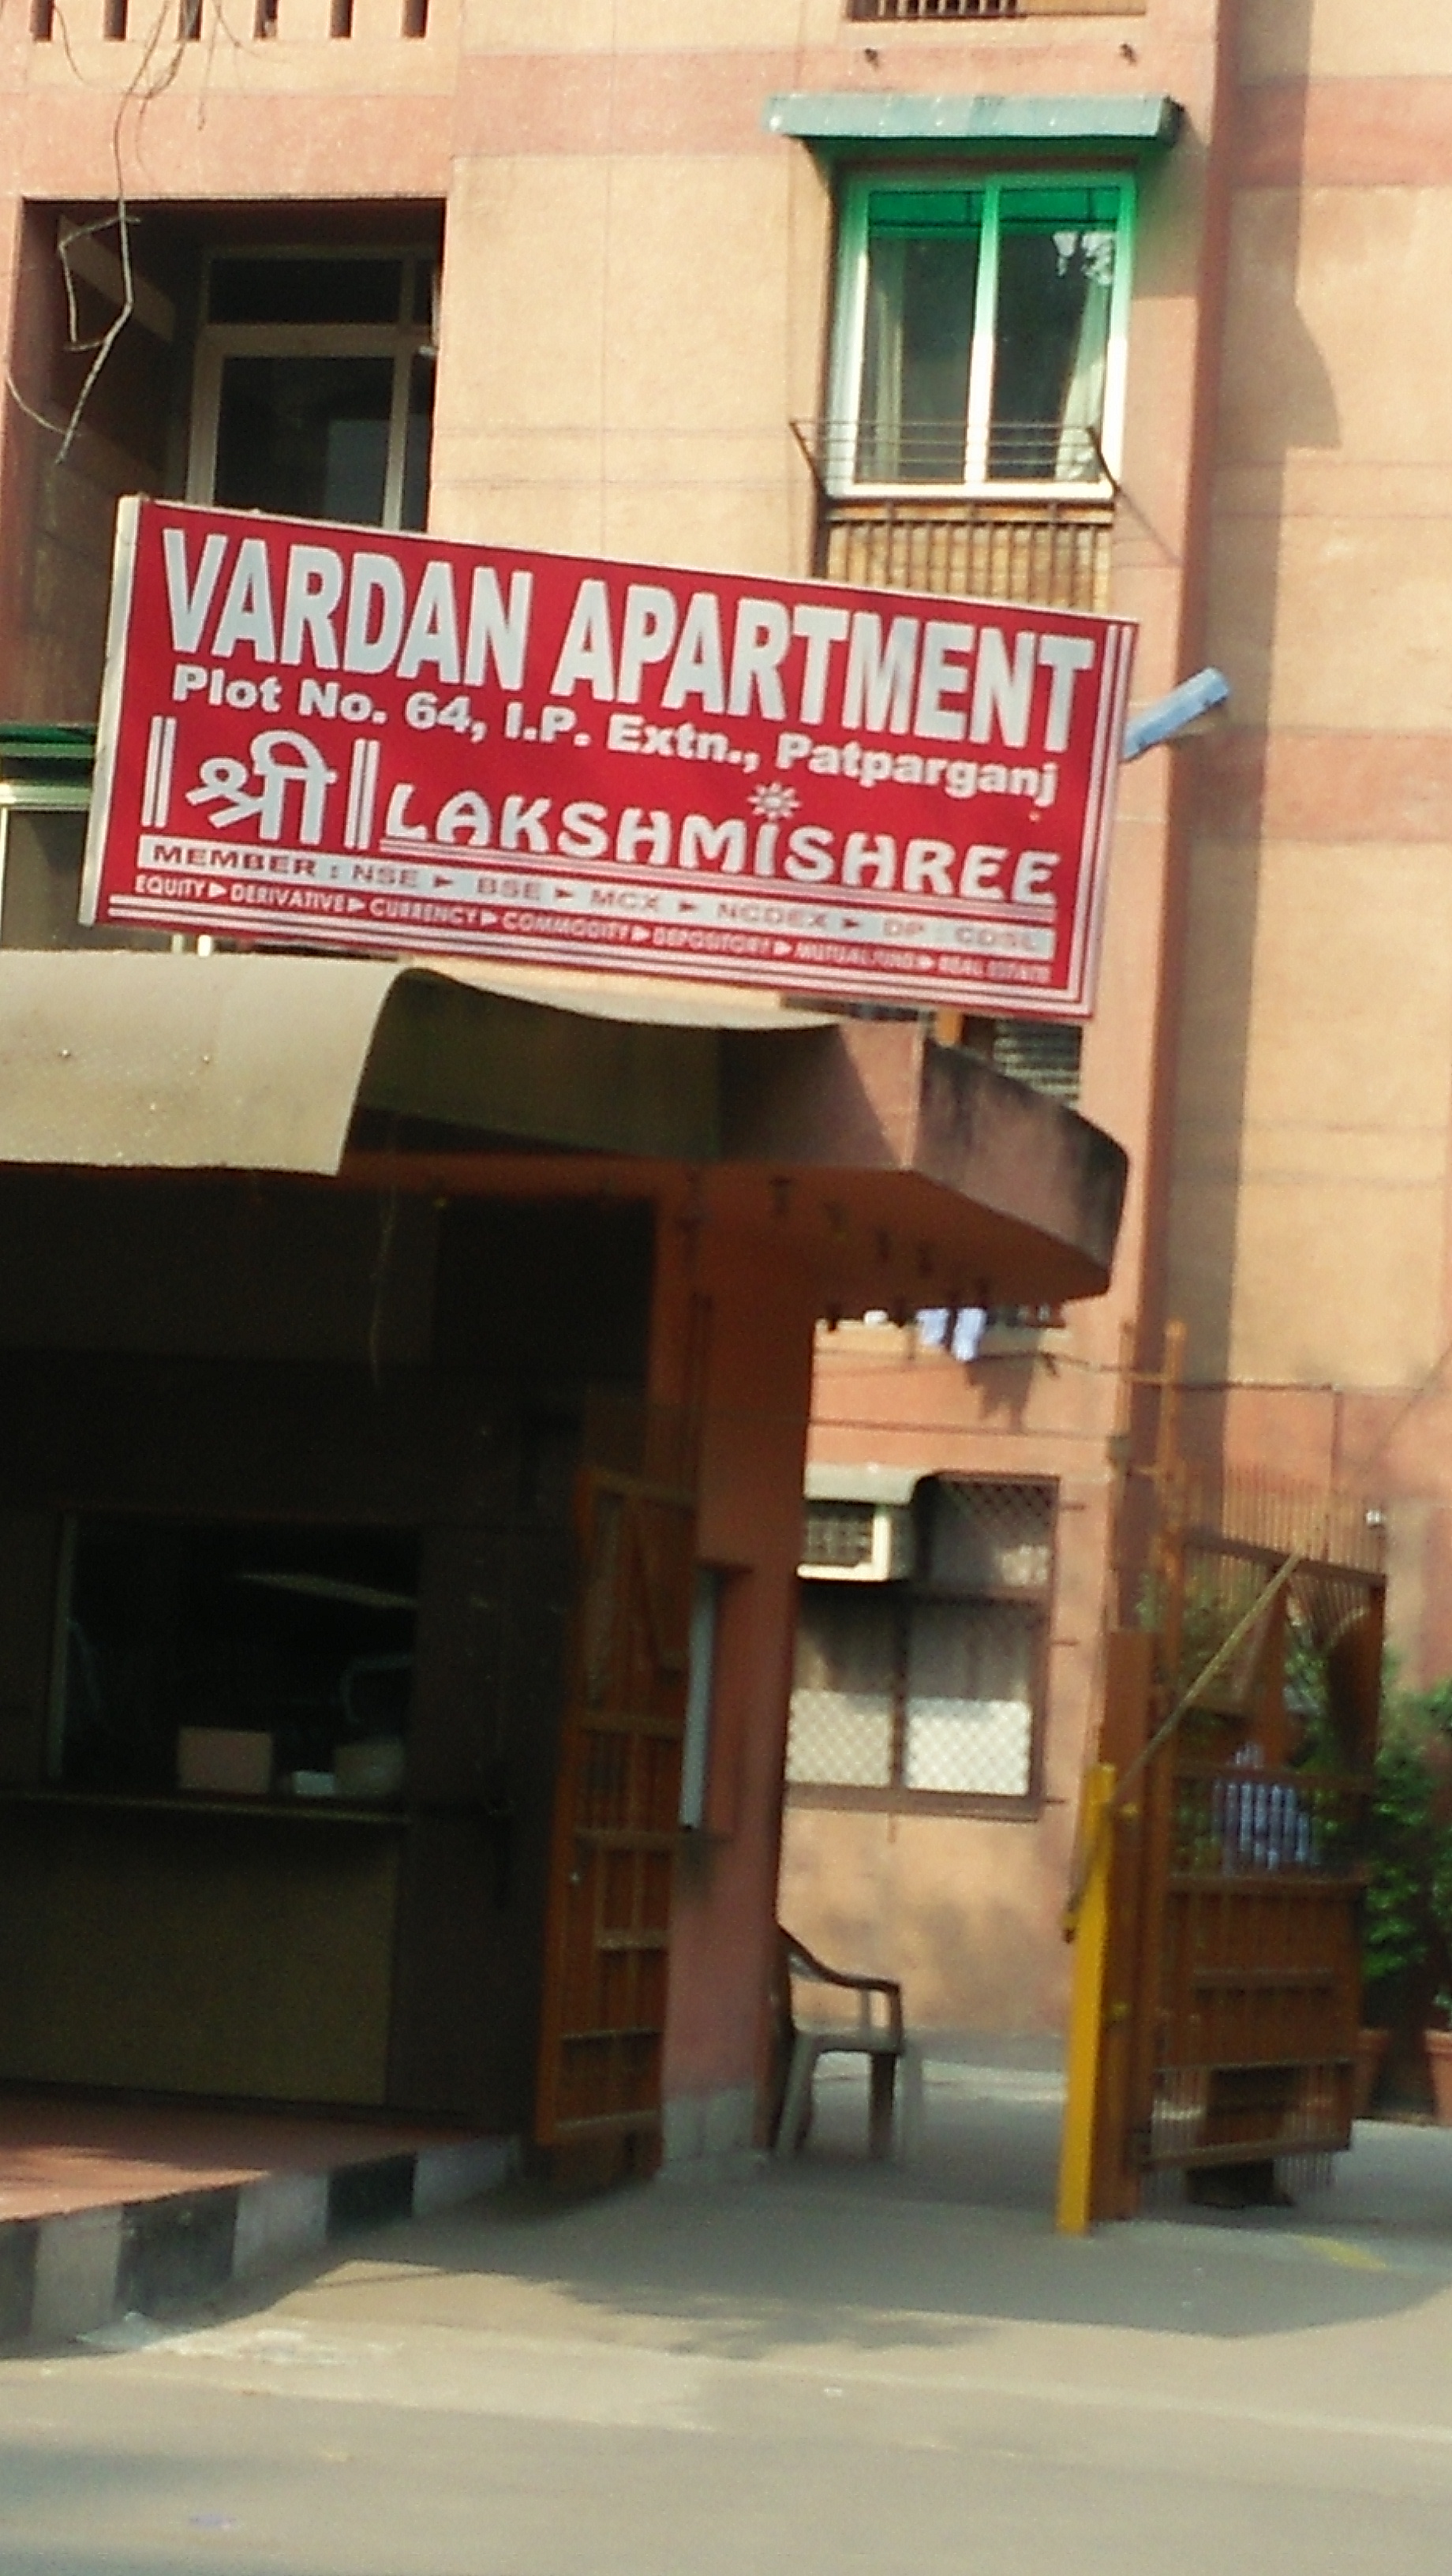 Vardan Appartments I.P., Extn.